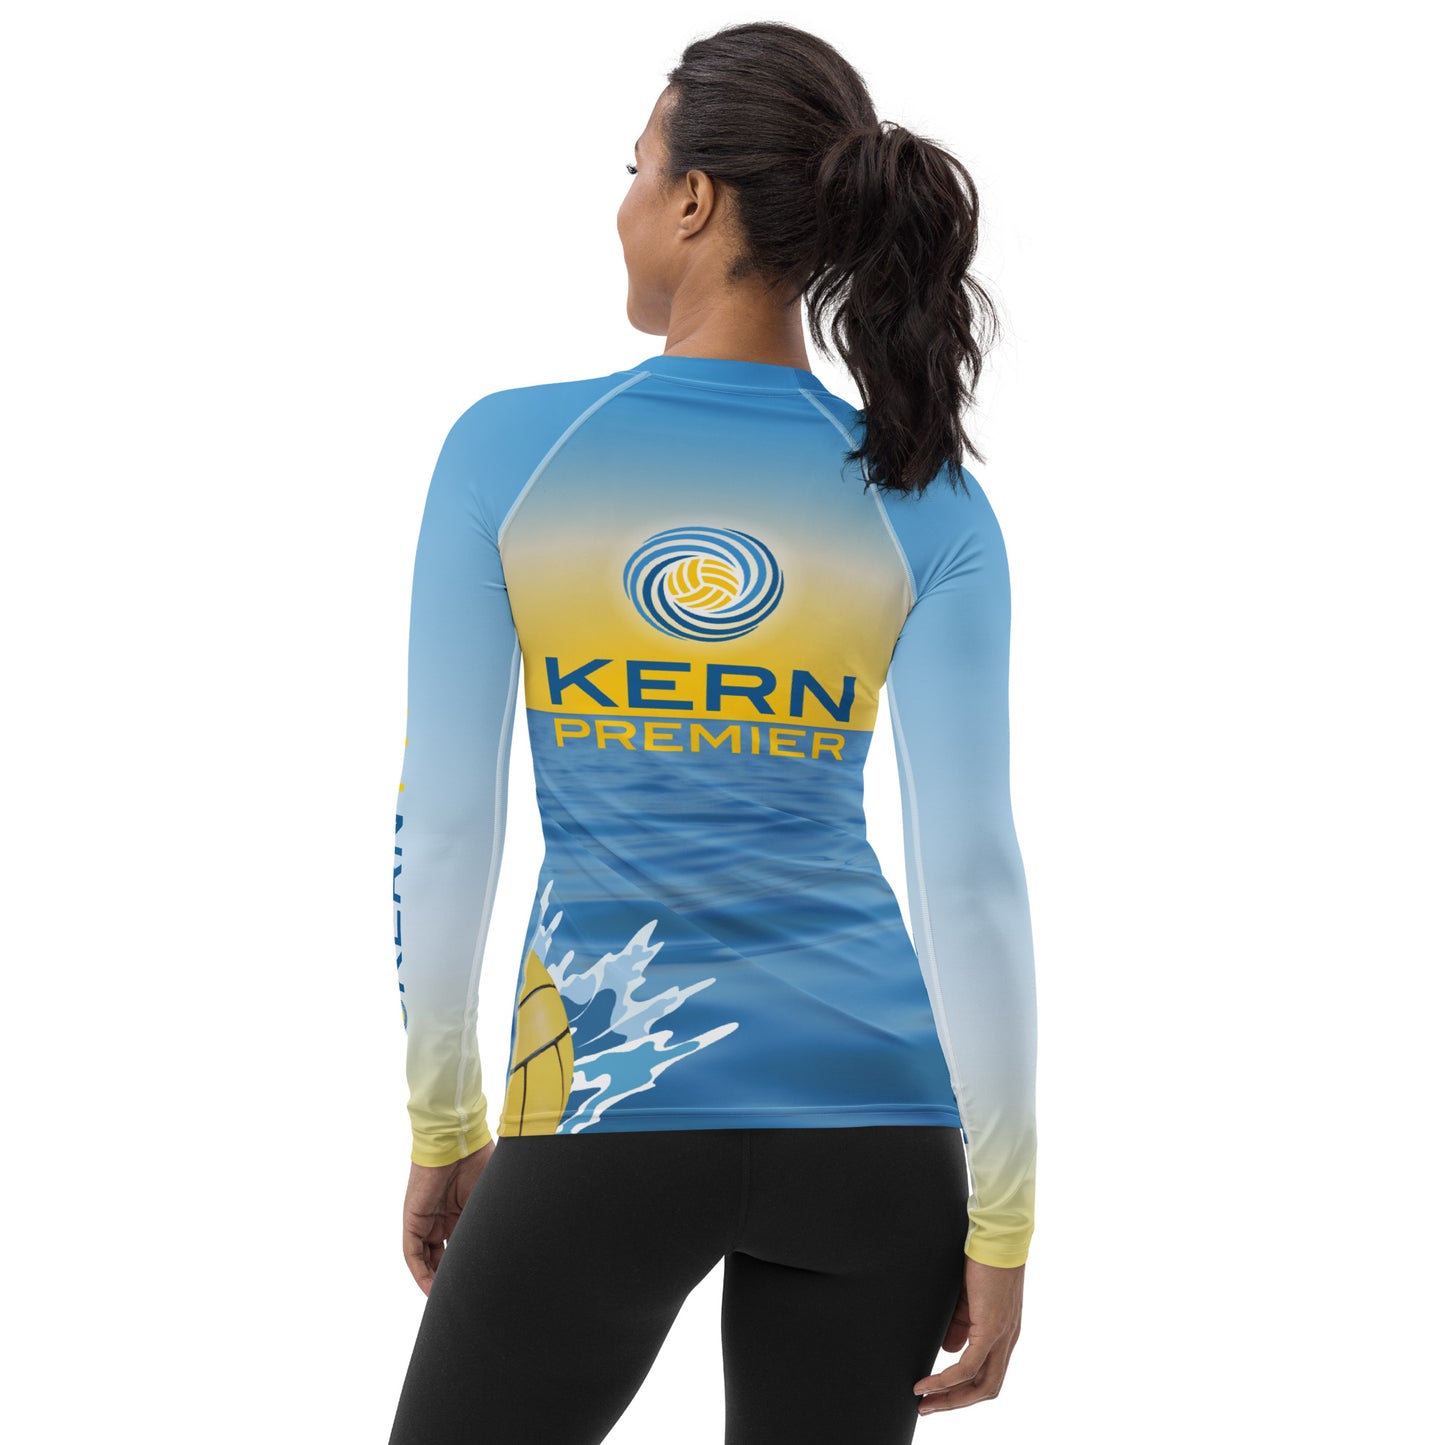 Kern Premier - Team Design -  Women's Rash Guard